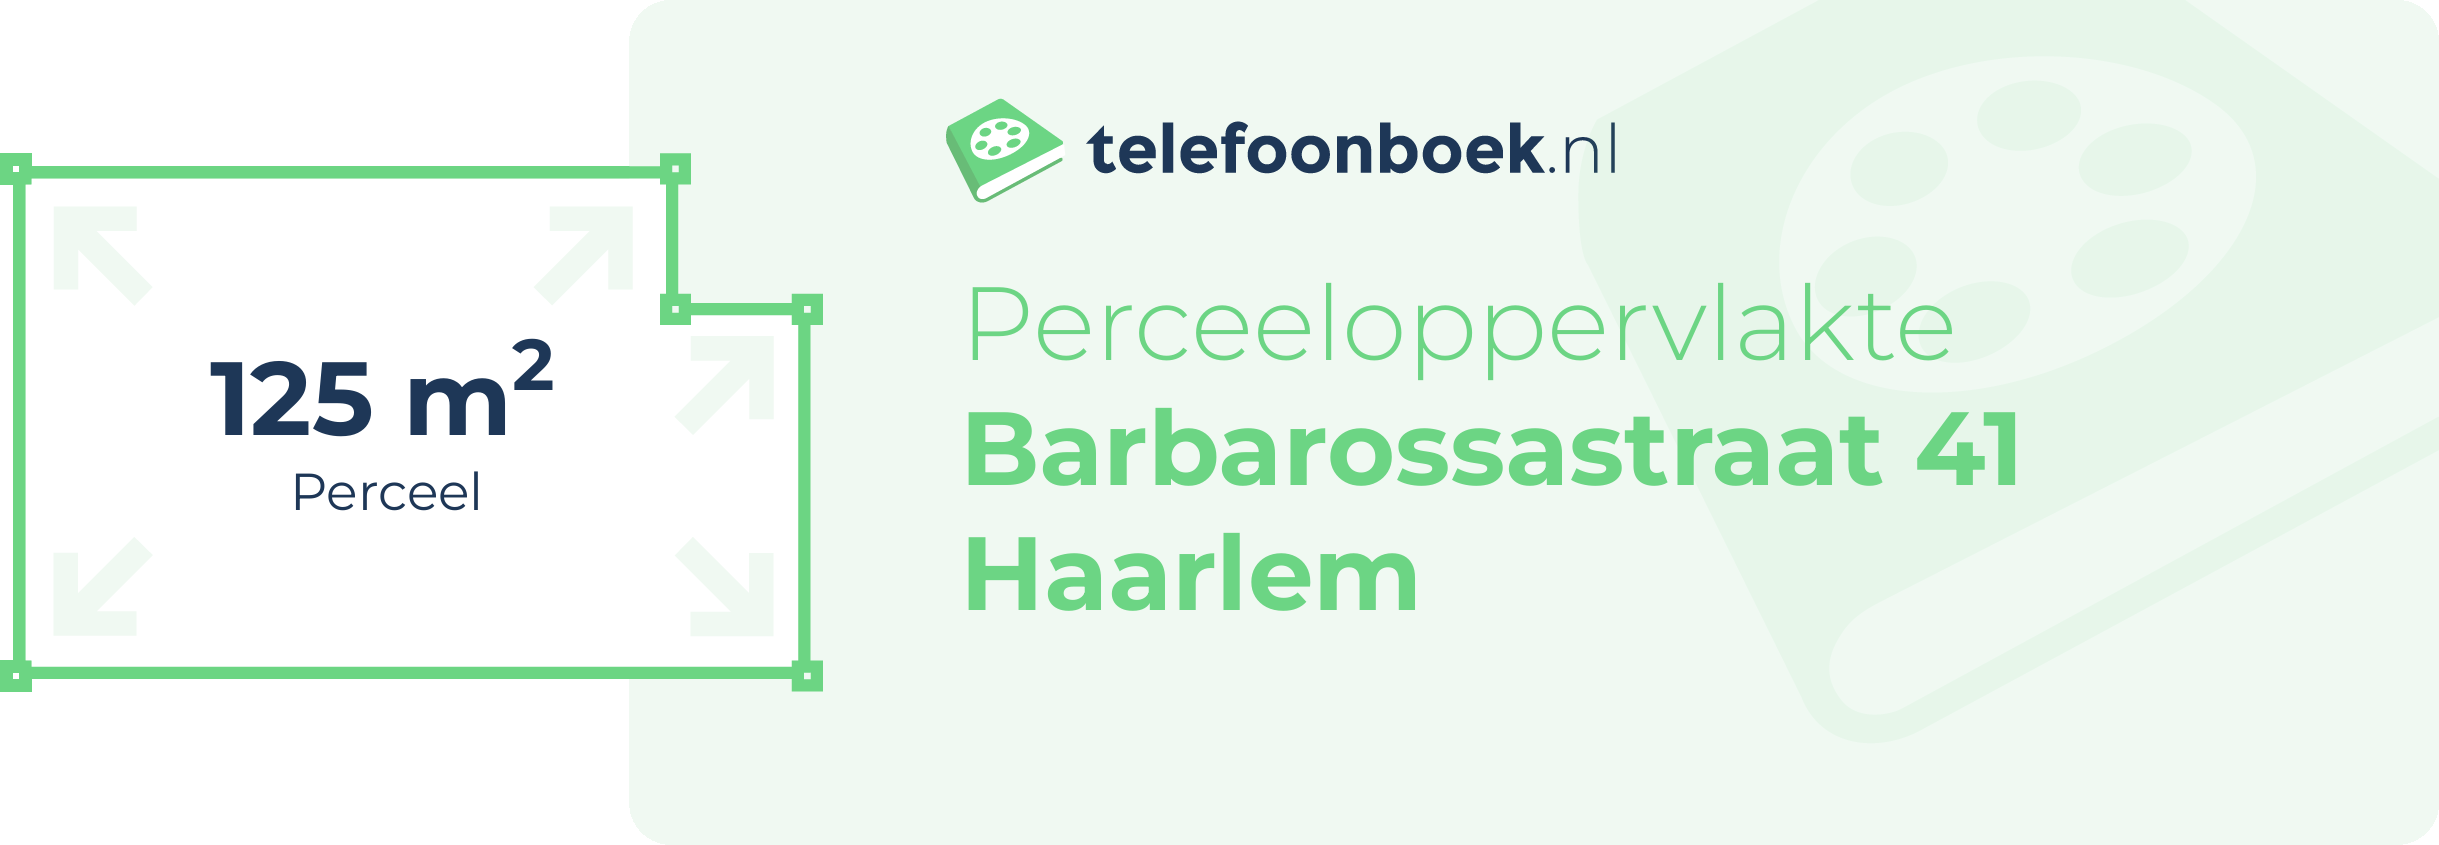 Perceeloppervlakte Barbarossastraat 41 Haarlem